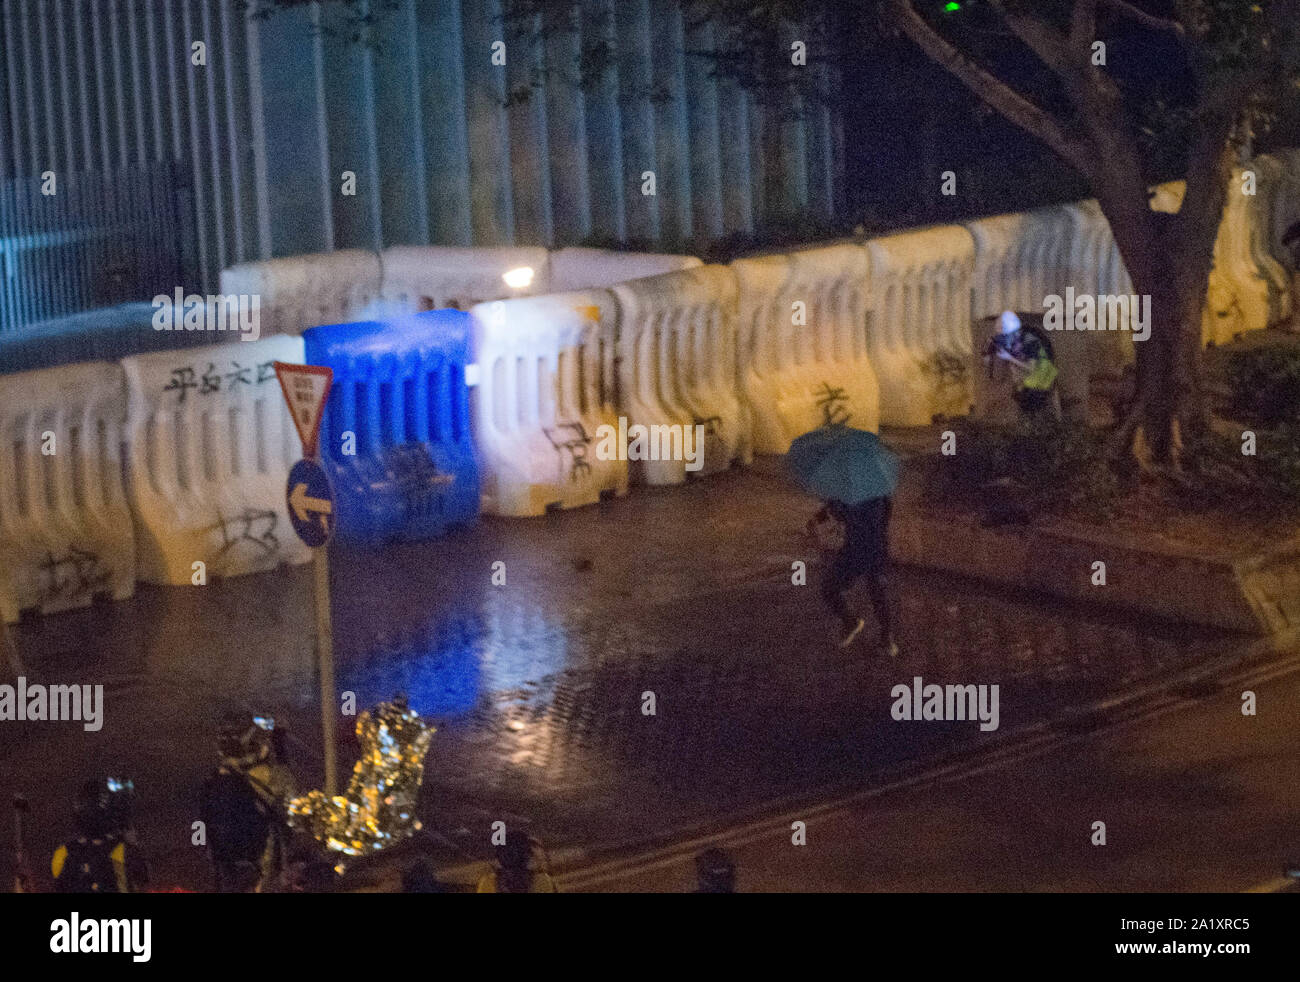 Hong Kong, 28 Sep 2019 - A rioter was throwing a petrol bomb in Hong Kong government house. Stock Photo